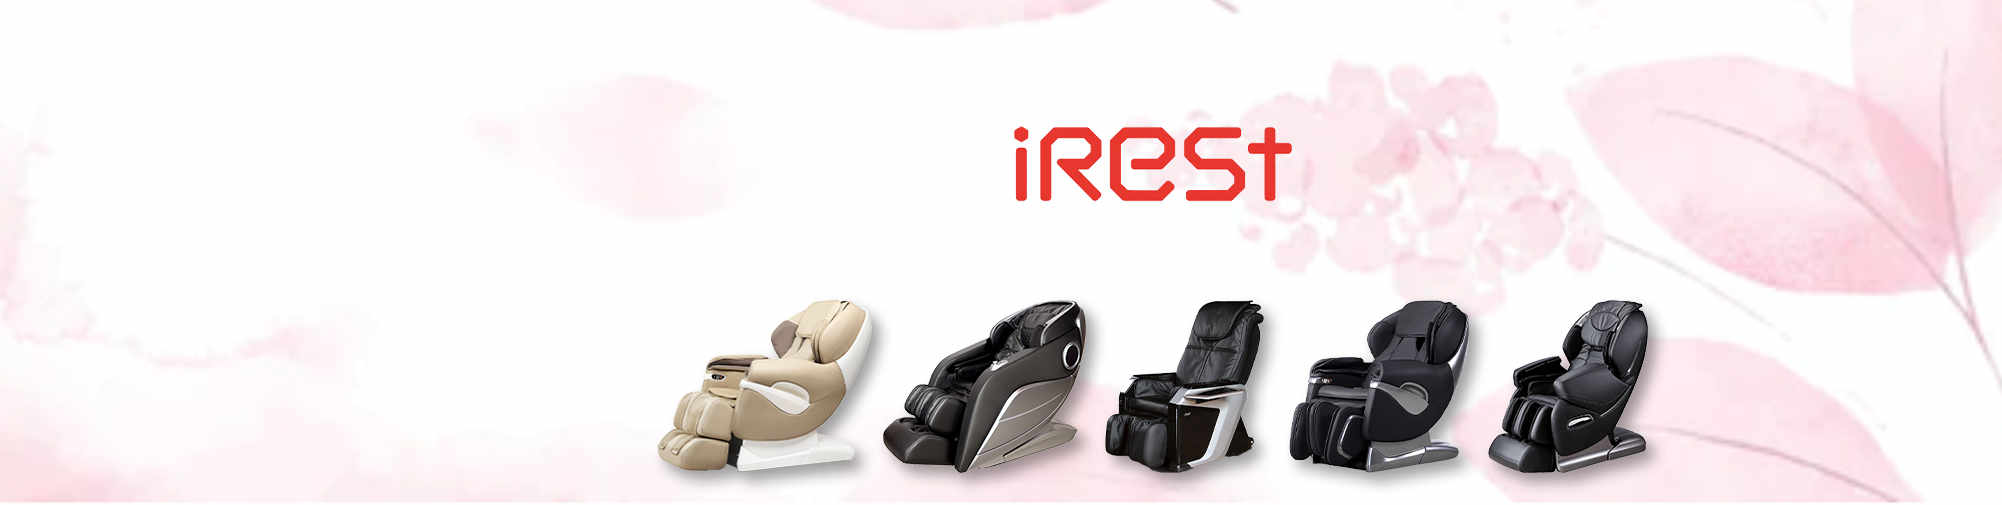 iRest - a breath of fresh air for the massage chair market | Massagesessel Welt